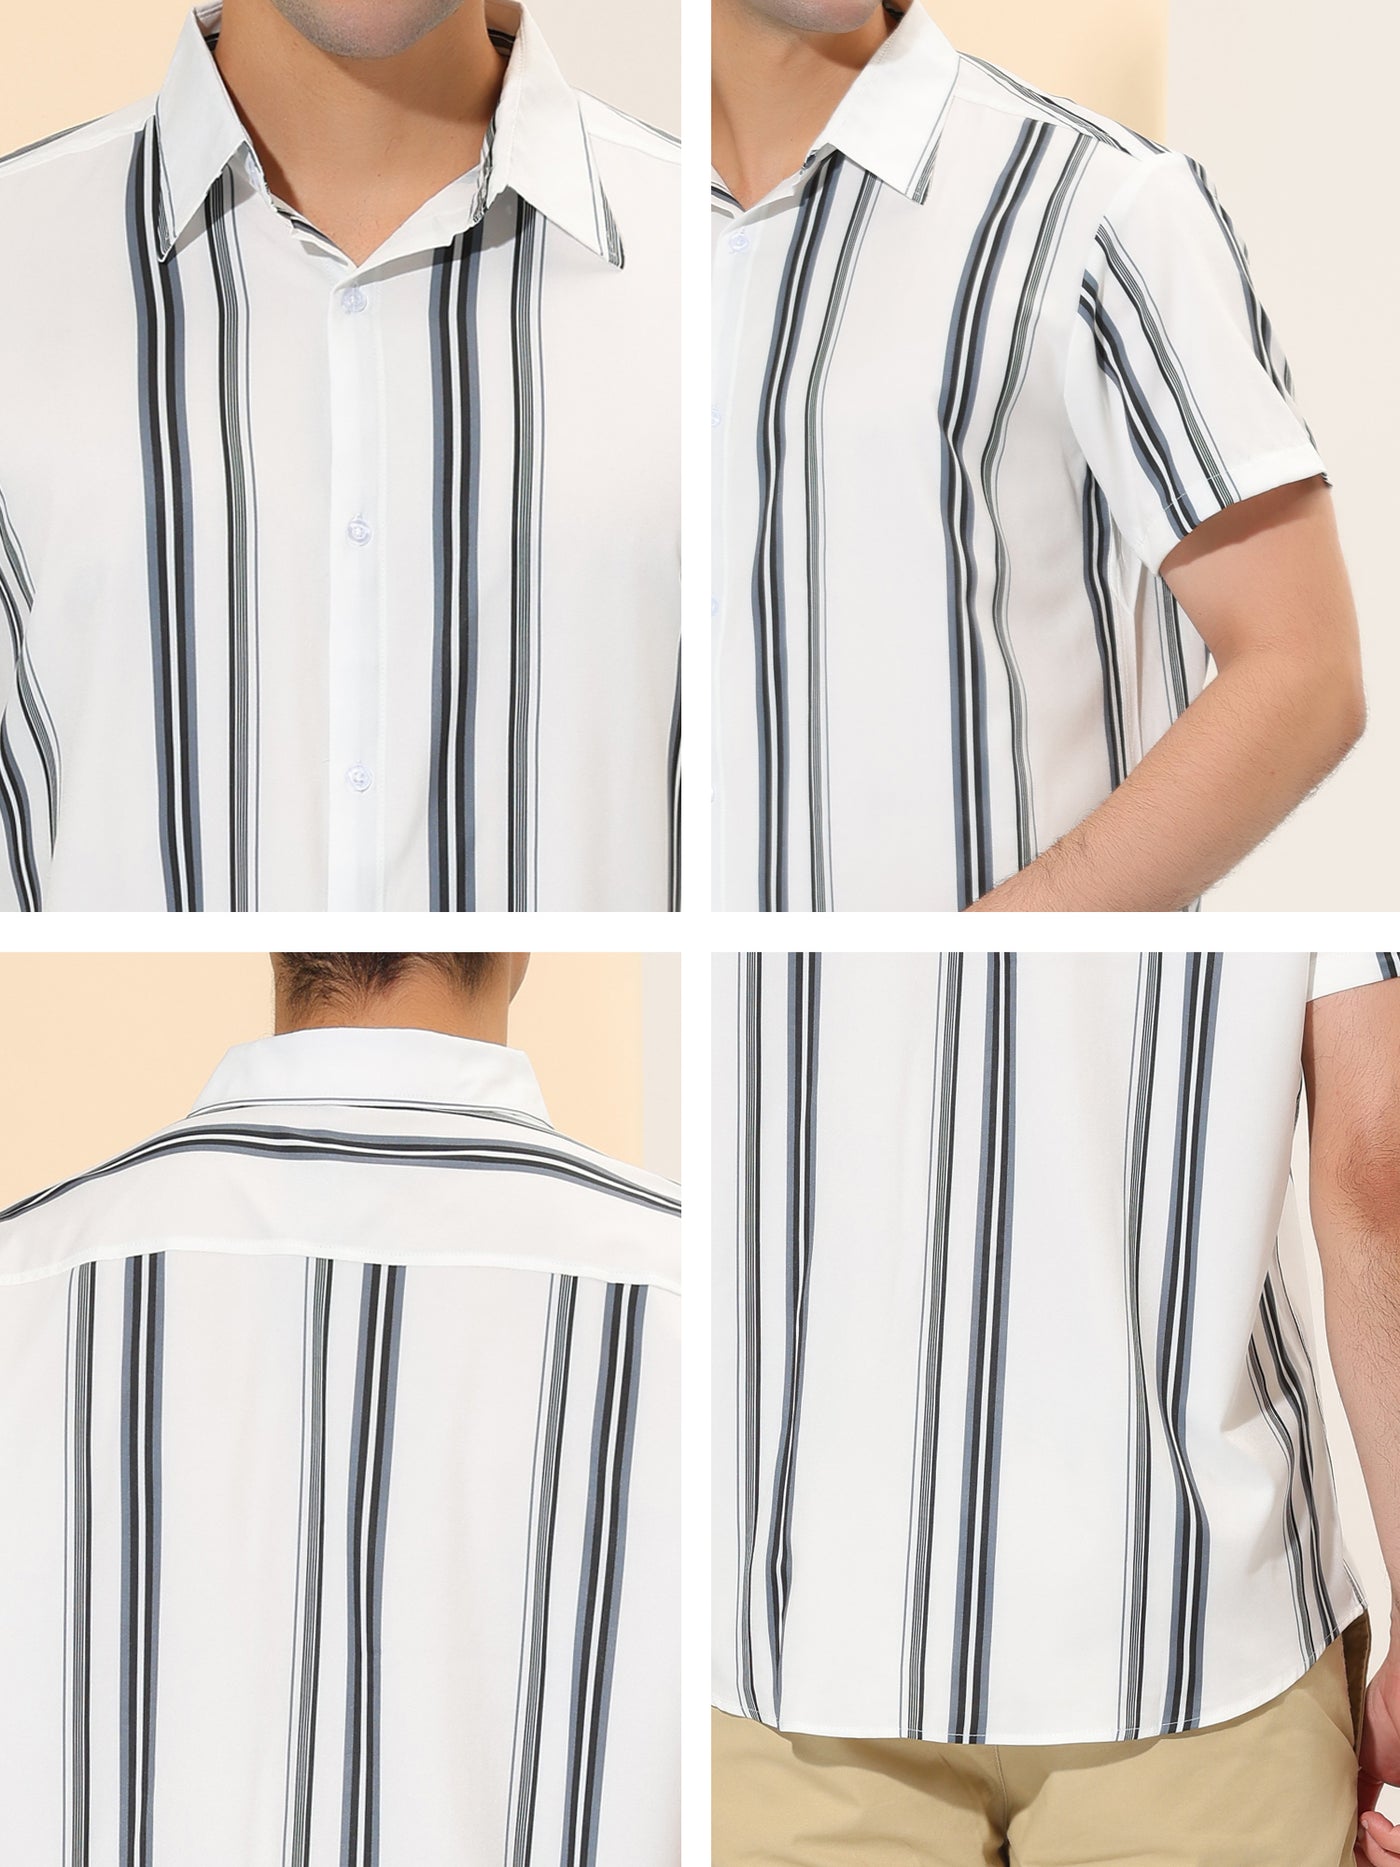 Bublédon Men's Summer Casual Short Sleeves Button Down Striped Shirt